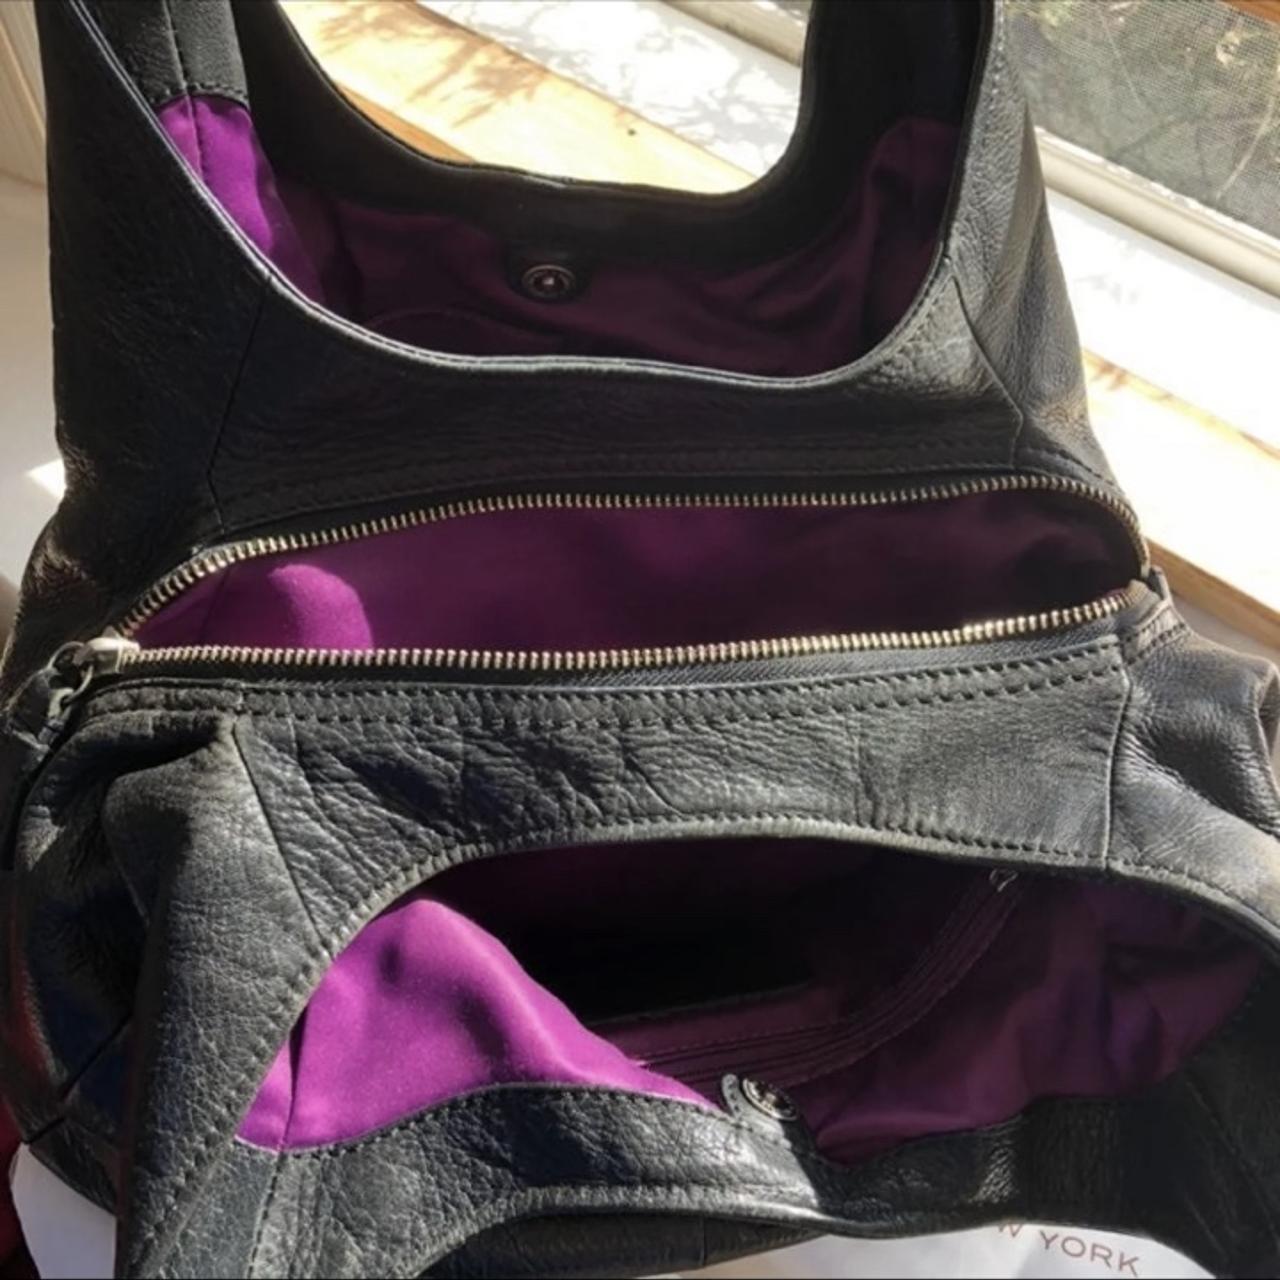 Coach Purple/Plum Satchel Ashley Gathered Leather Purse. - Bunting Online  Auctions